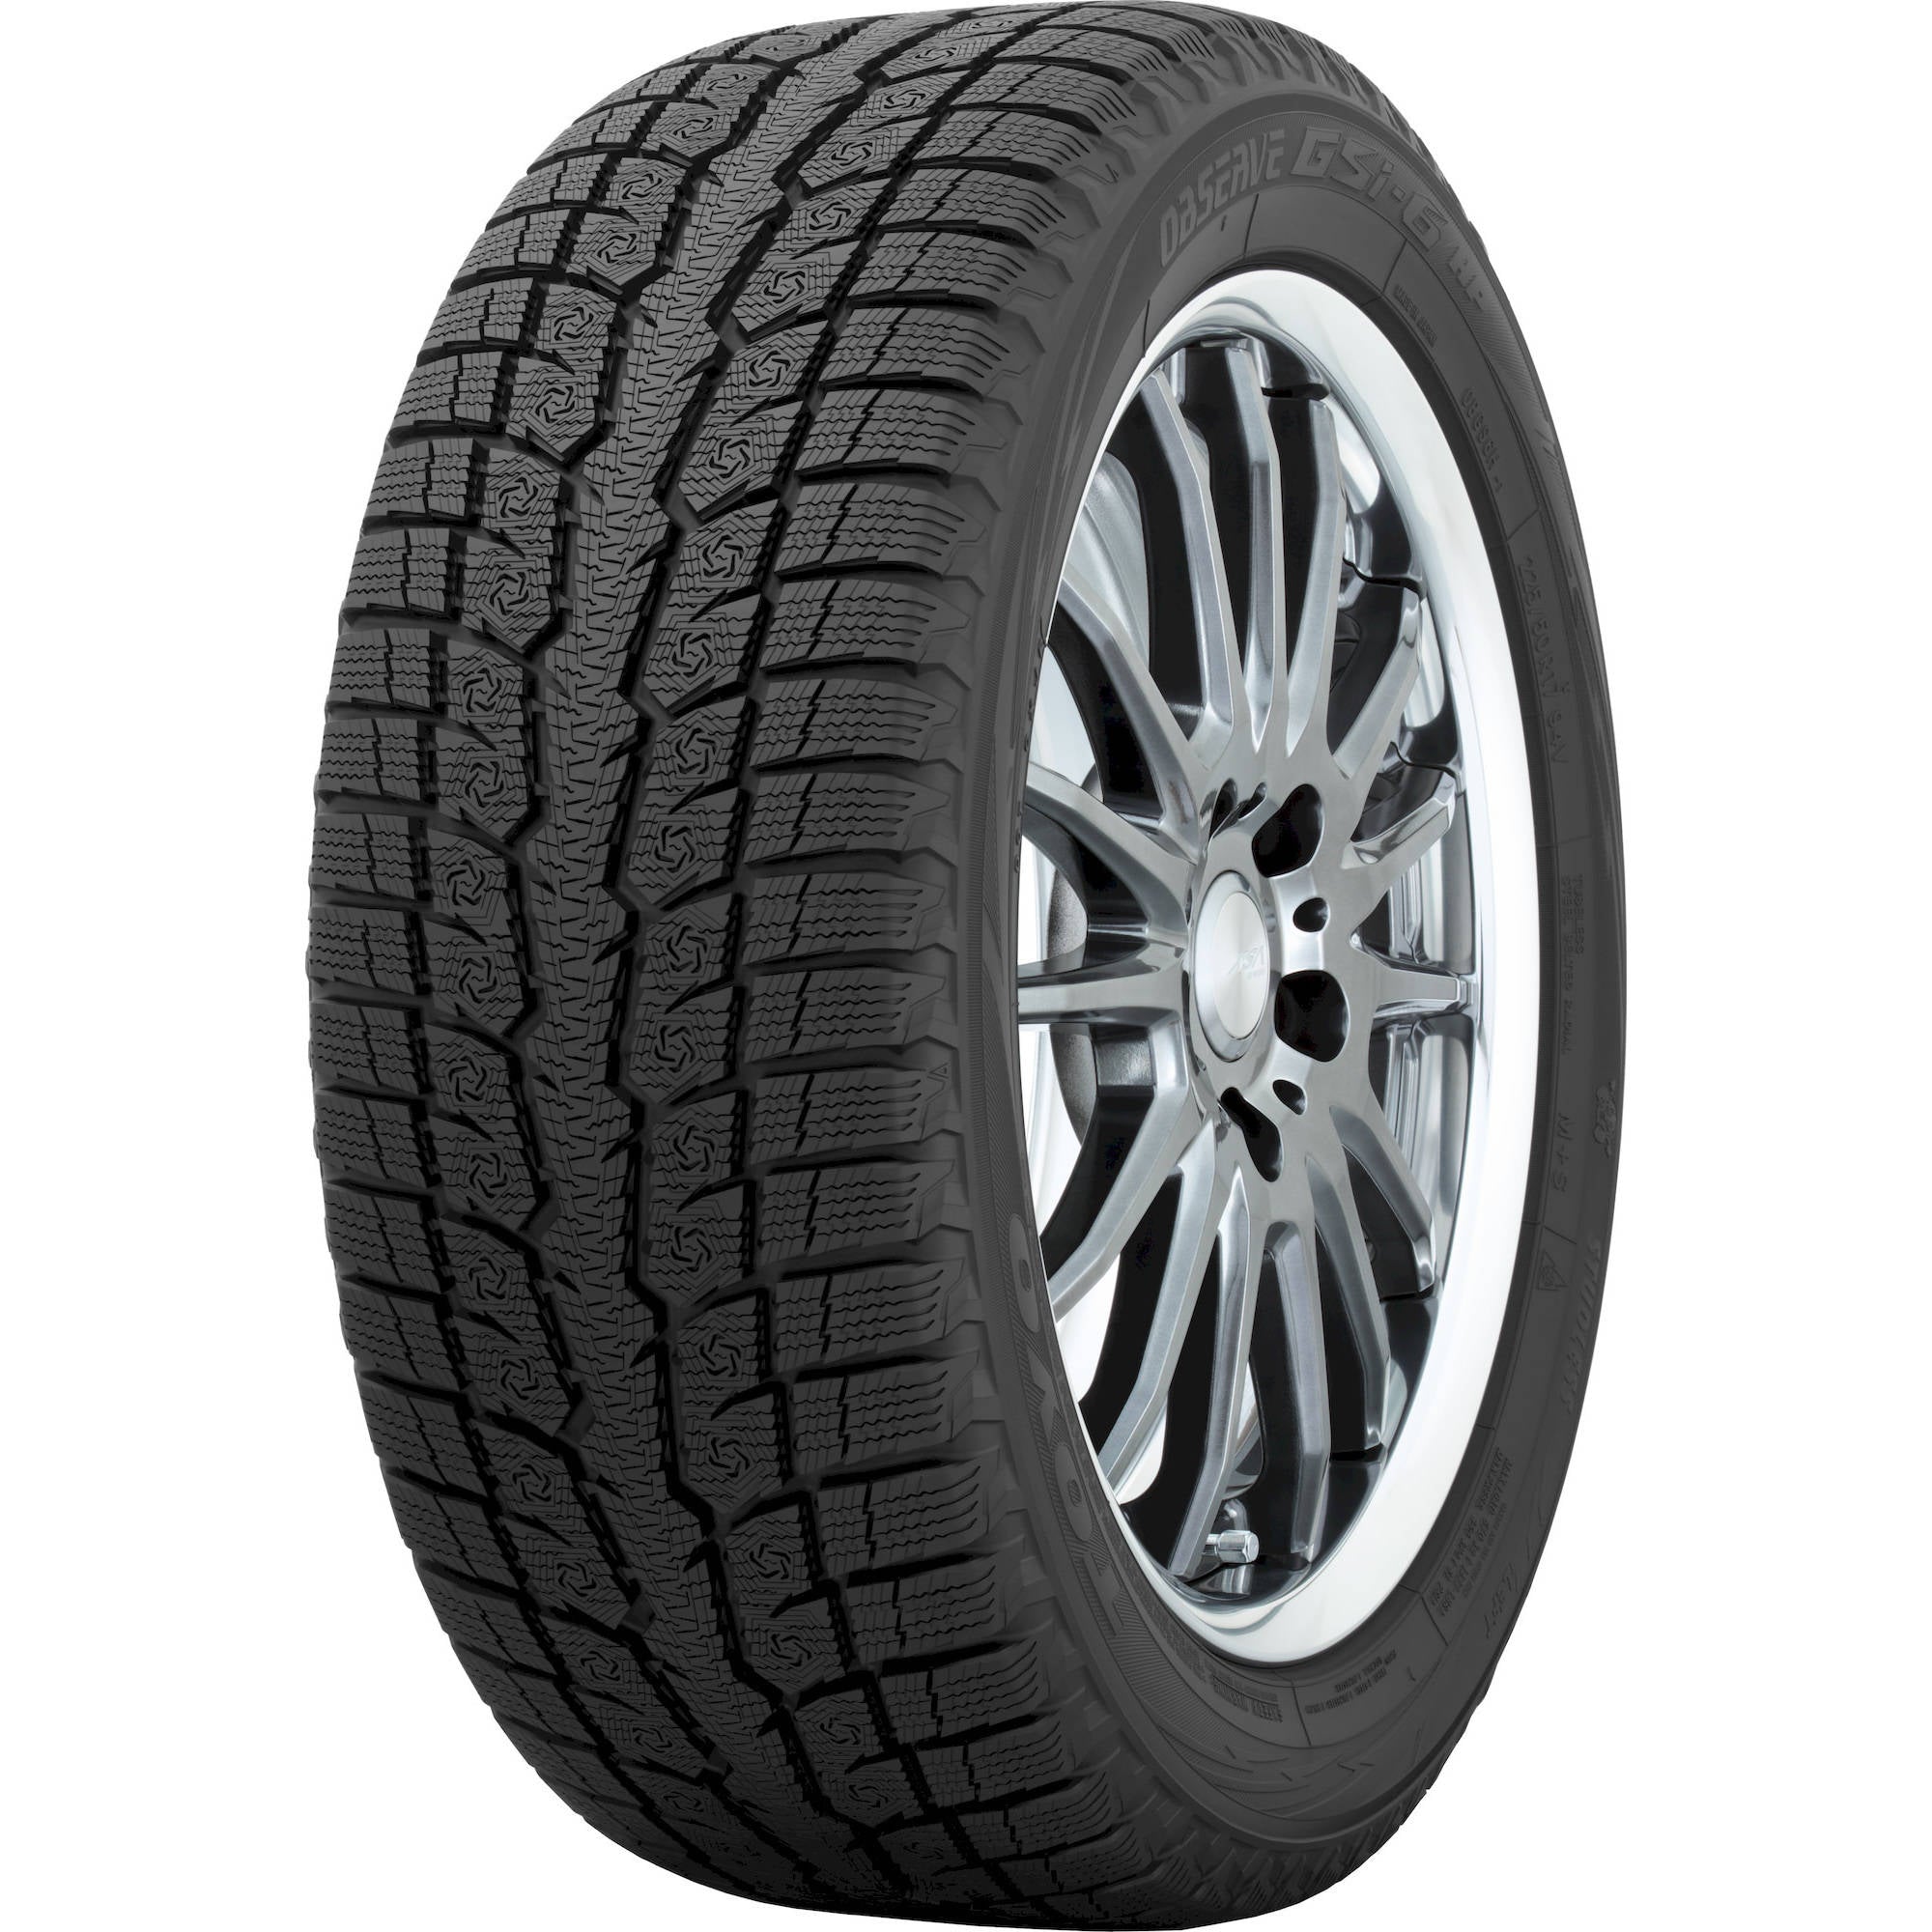 TOYO TIRES OBSERVE GSI-6 205/55R16XL (24.9X8.1R 16) Tires